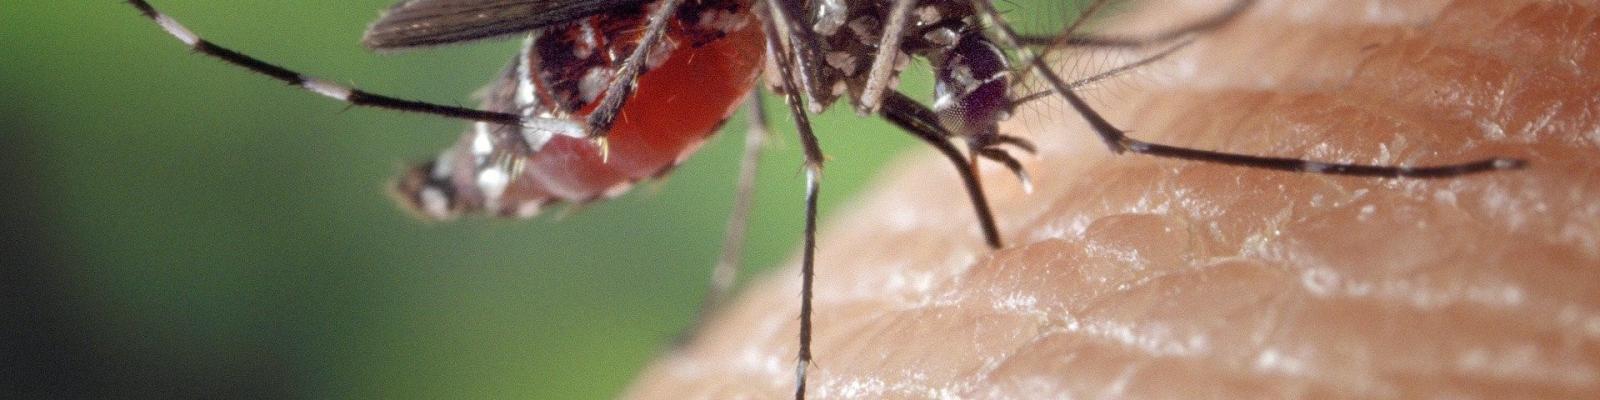 Female aedes albopictus mosquito blood feeding on human